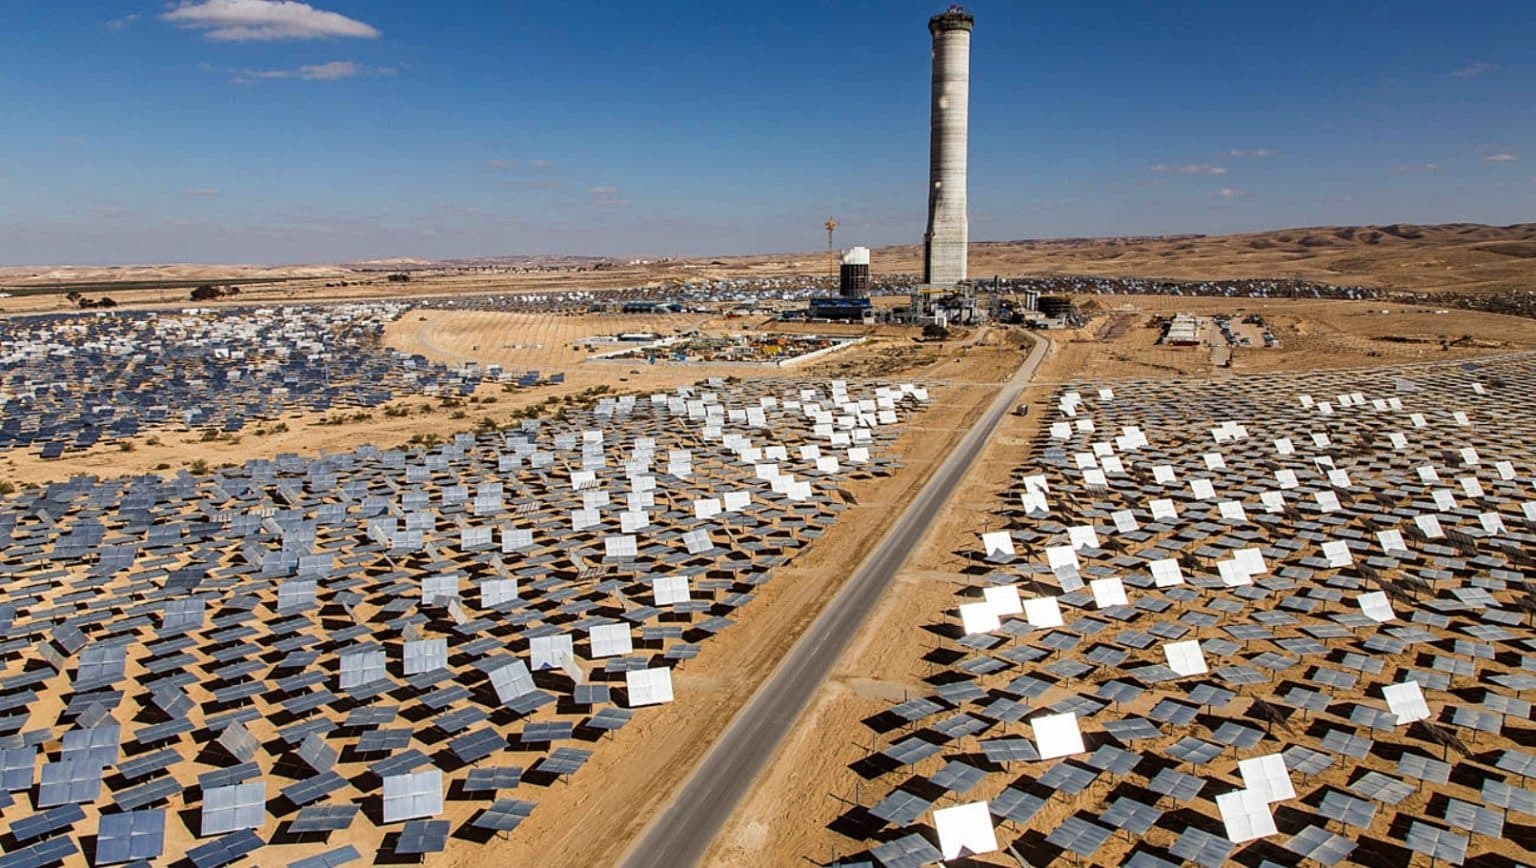 Torre de energia solar gigante 'Olho de Sauron' de 245 metros de altura situada no deserto de Israel está revolucionando o mercado